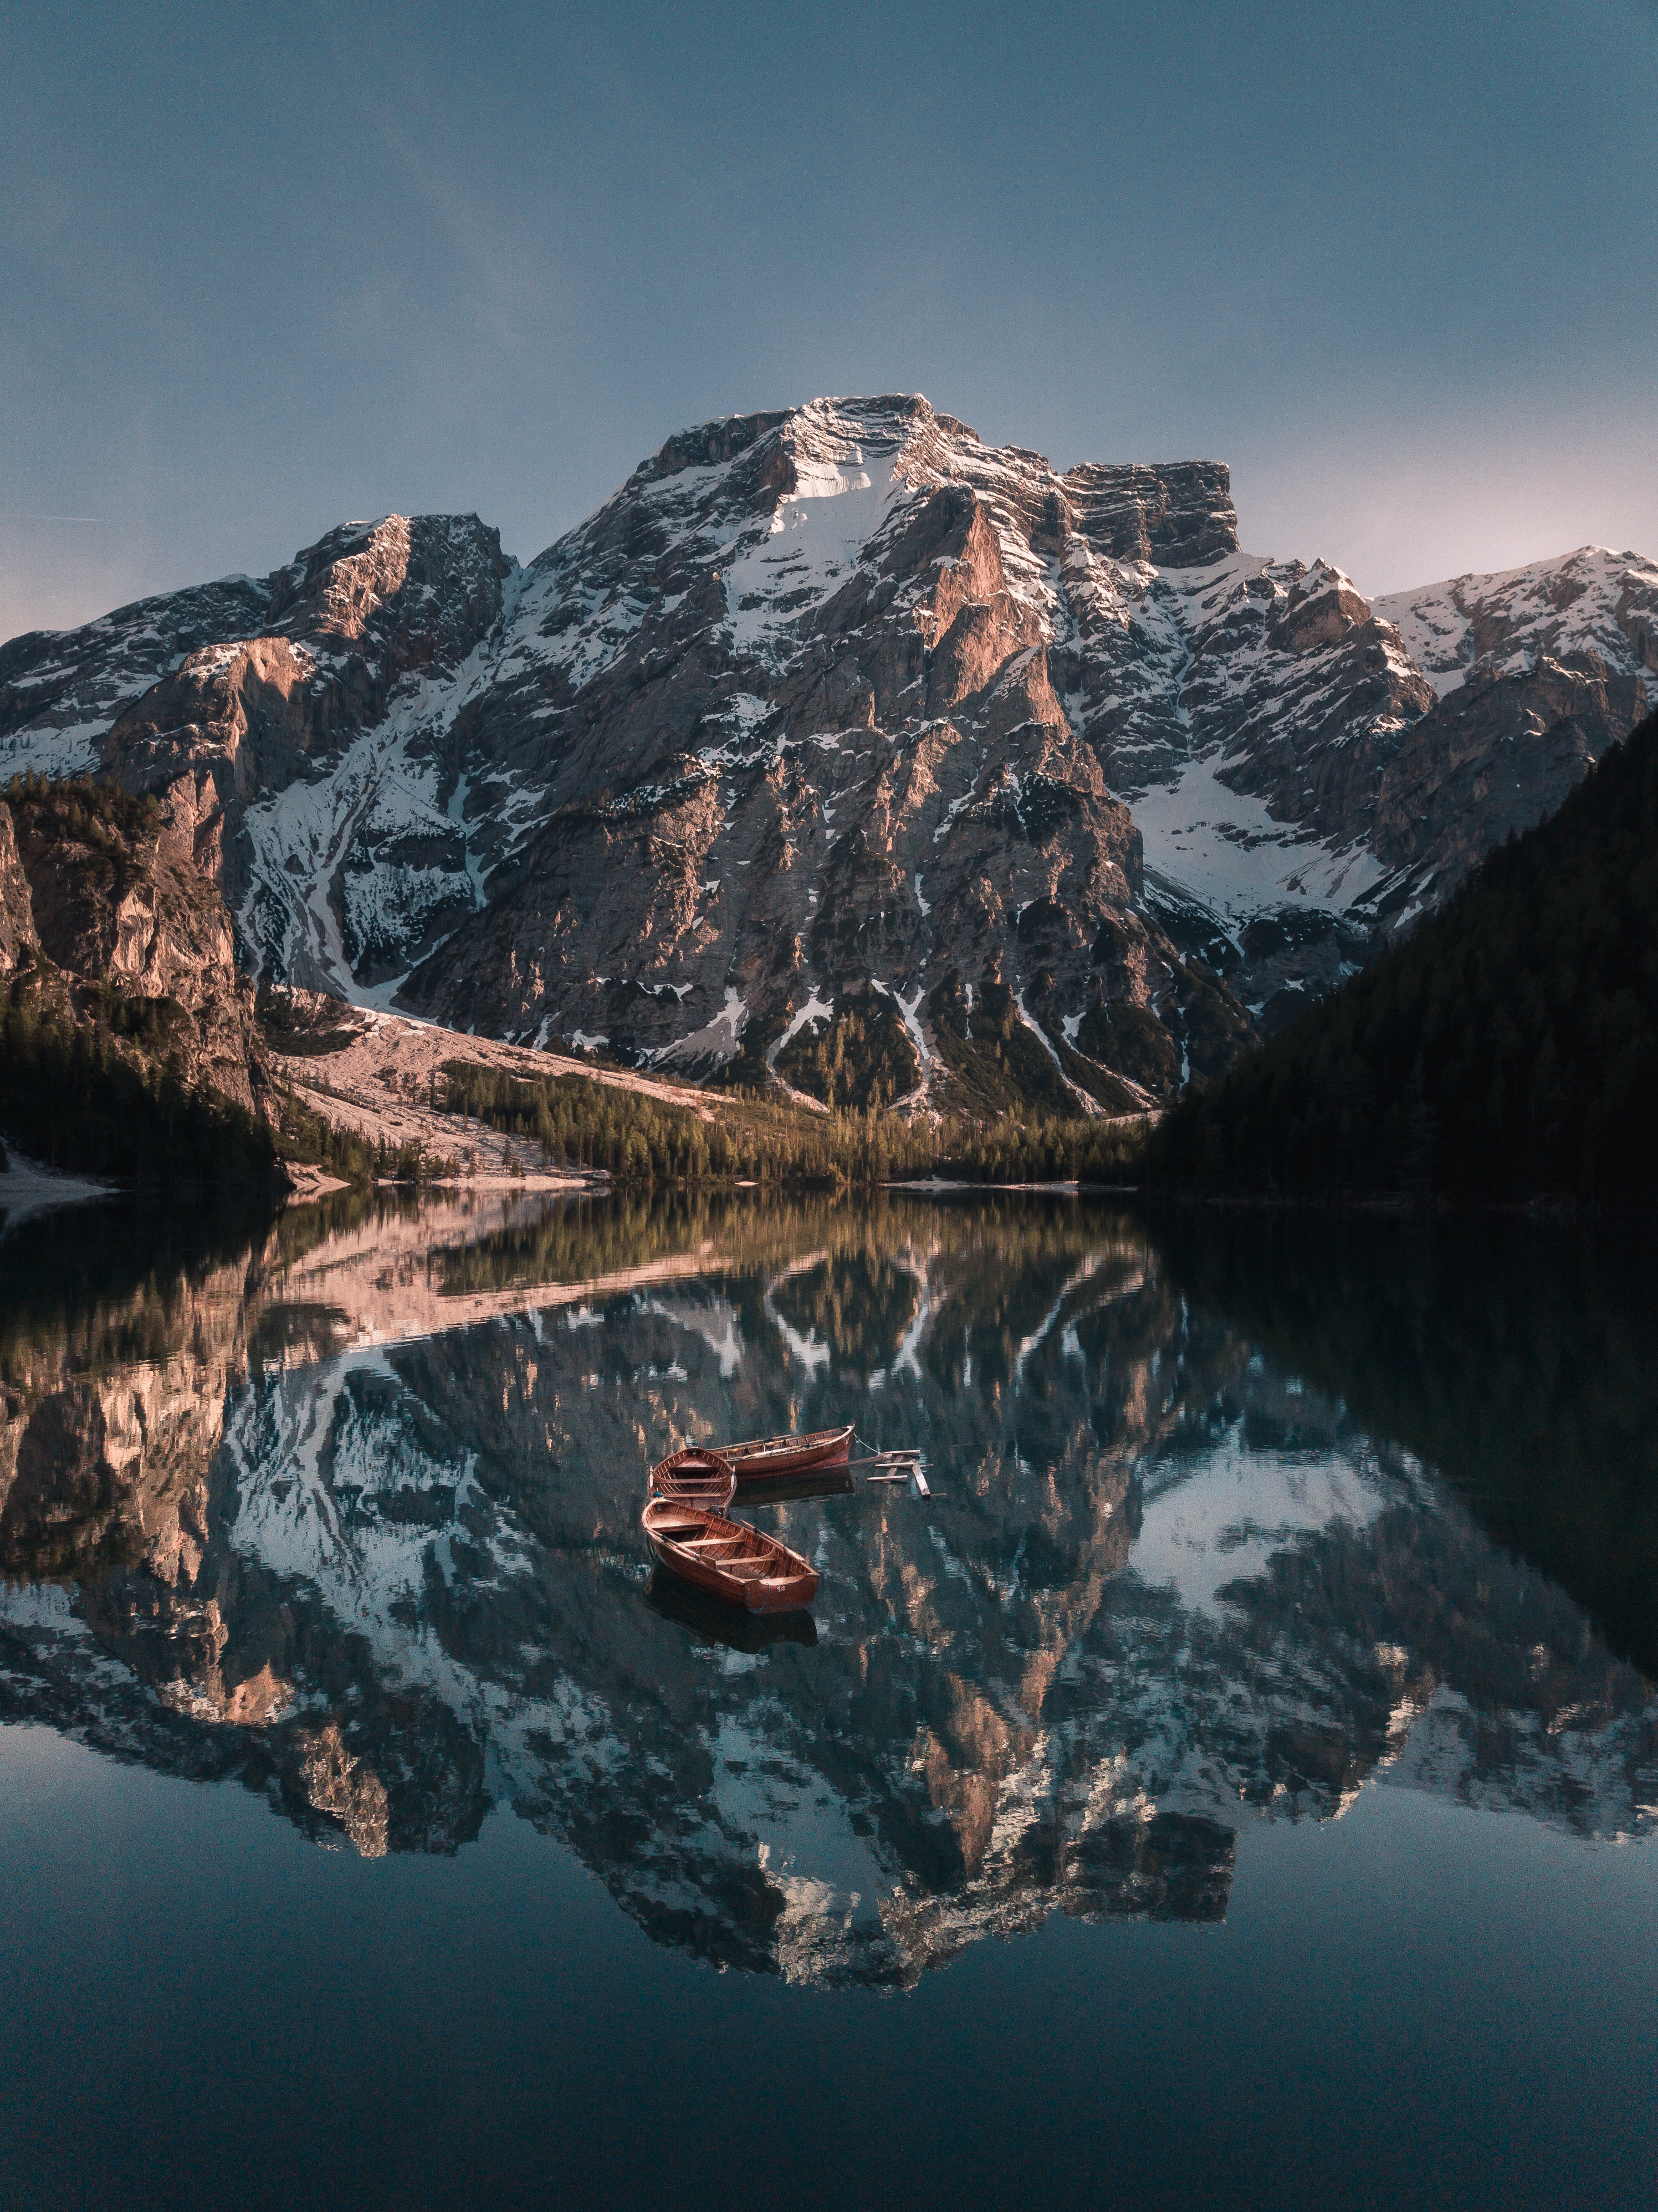 mountains, reflection, landscape, nature, boats, lake lock screen backgrounds